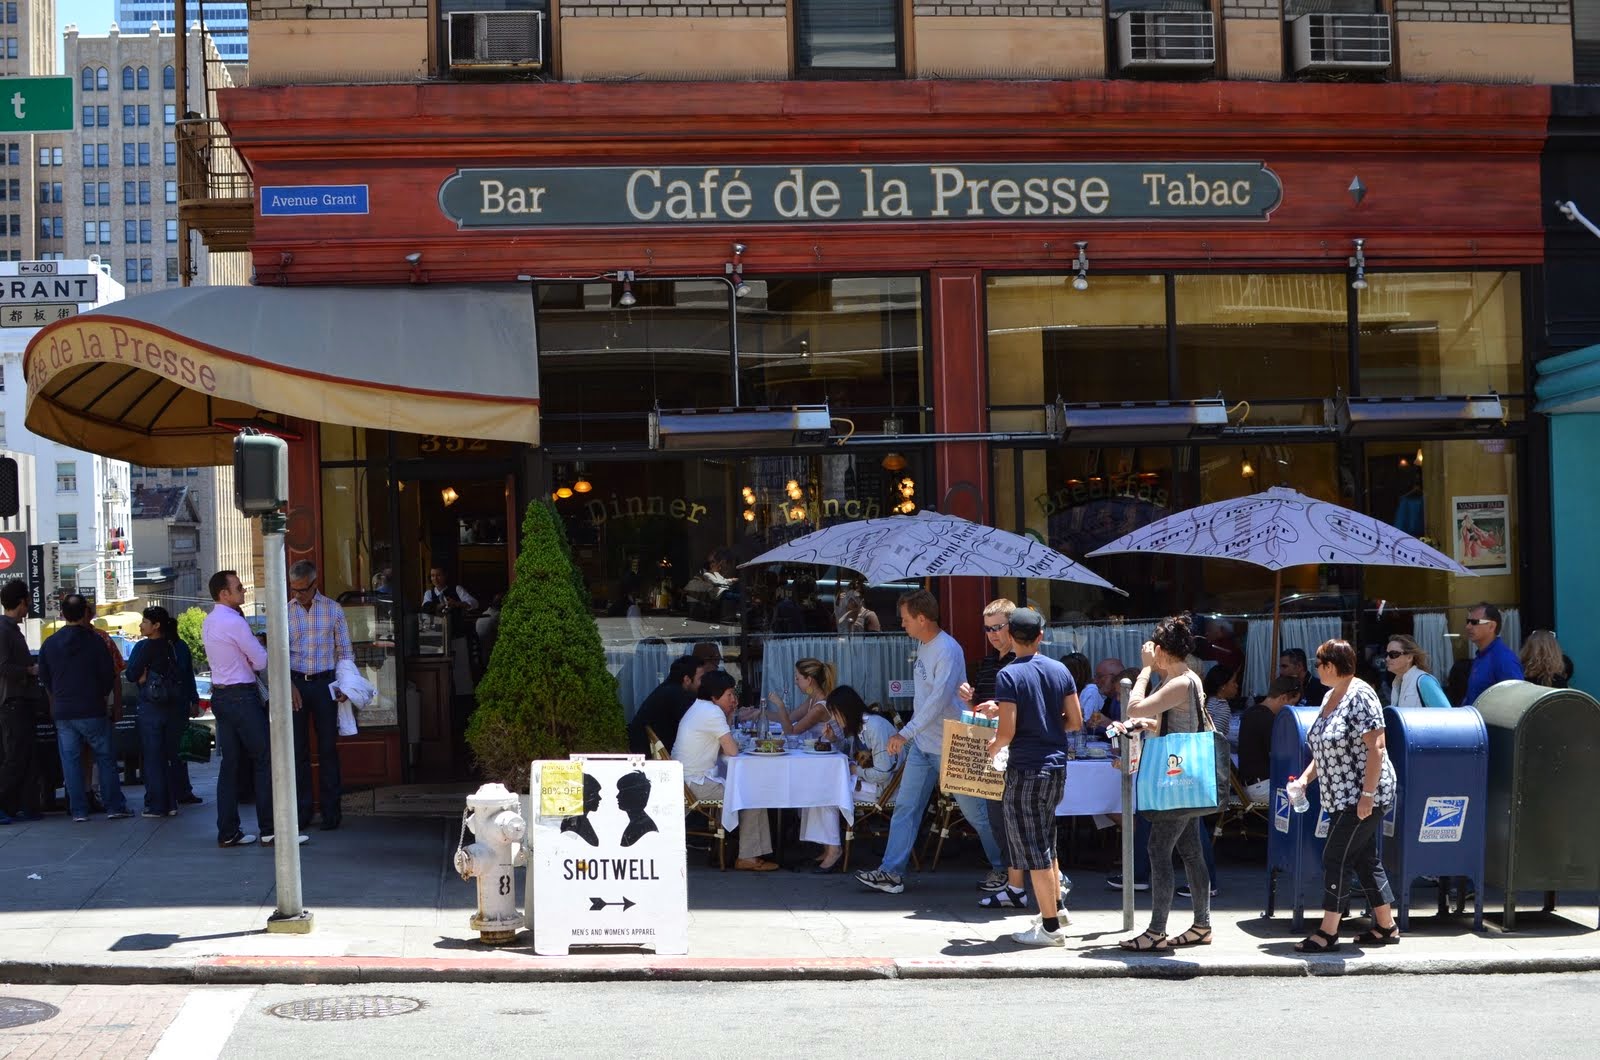 Cafe de la Presse, french restaurant in San Francisco — Cafe de la Presse